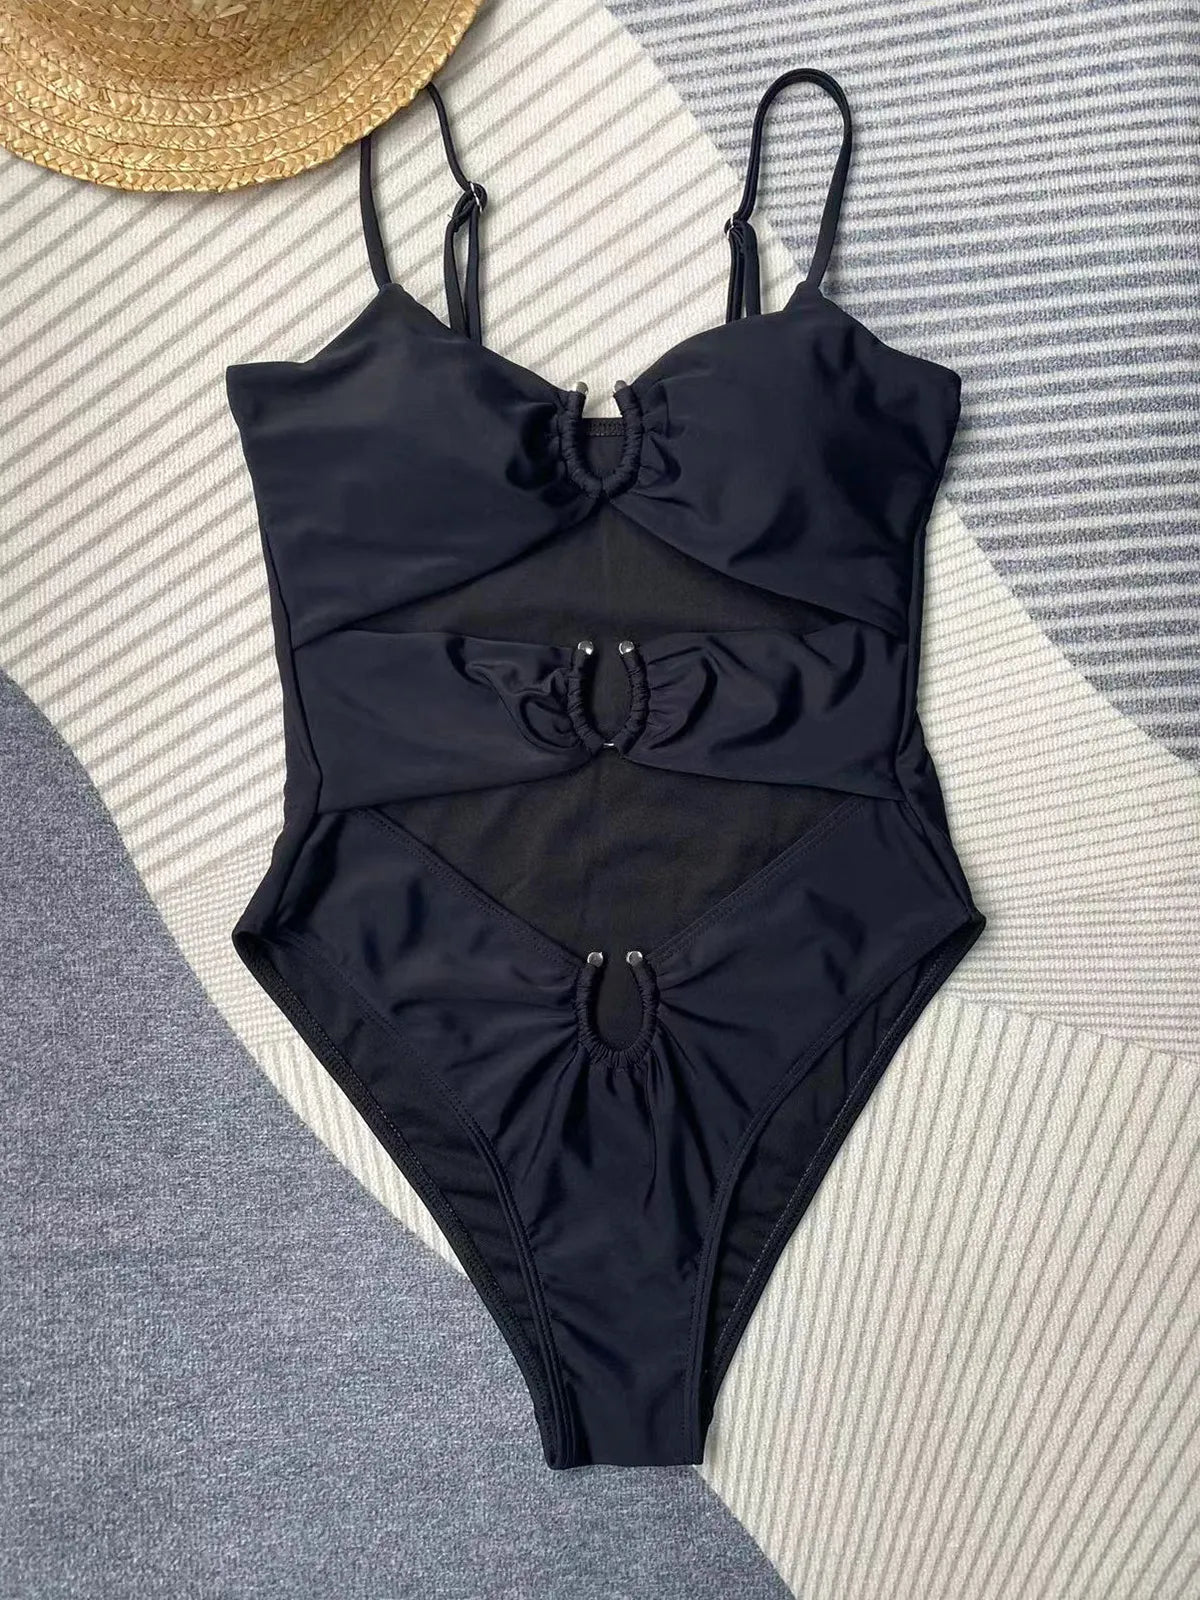 Metallic Loop Swimsuit Cutout Padded Bathing Suit